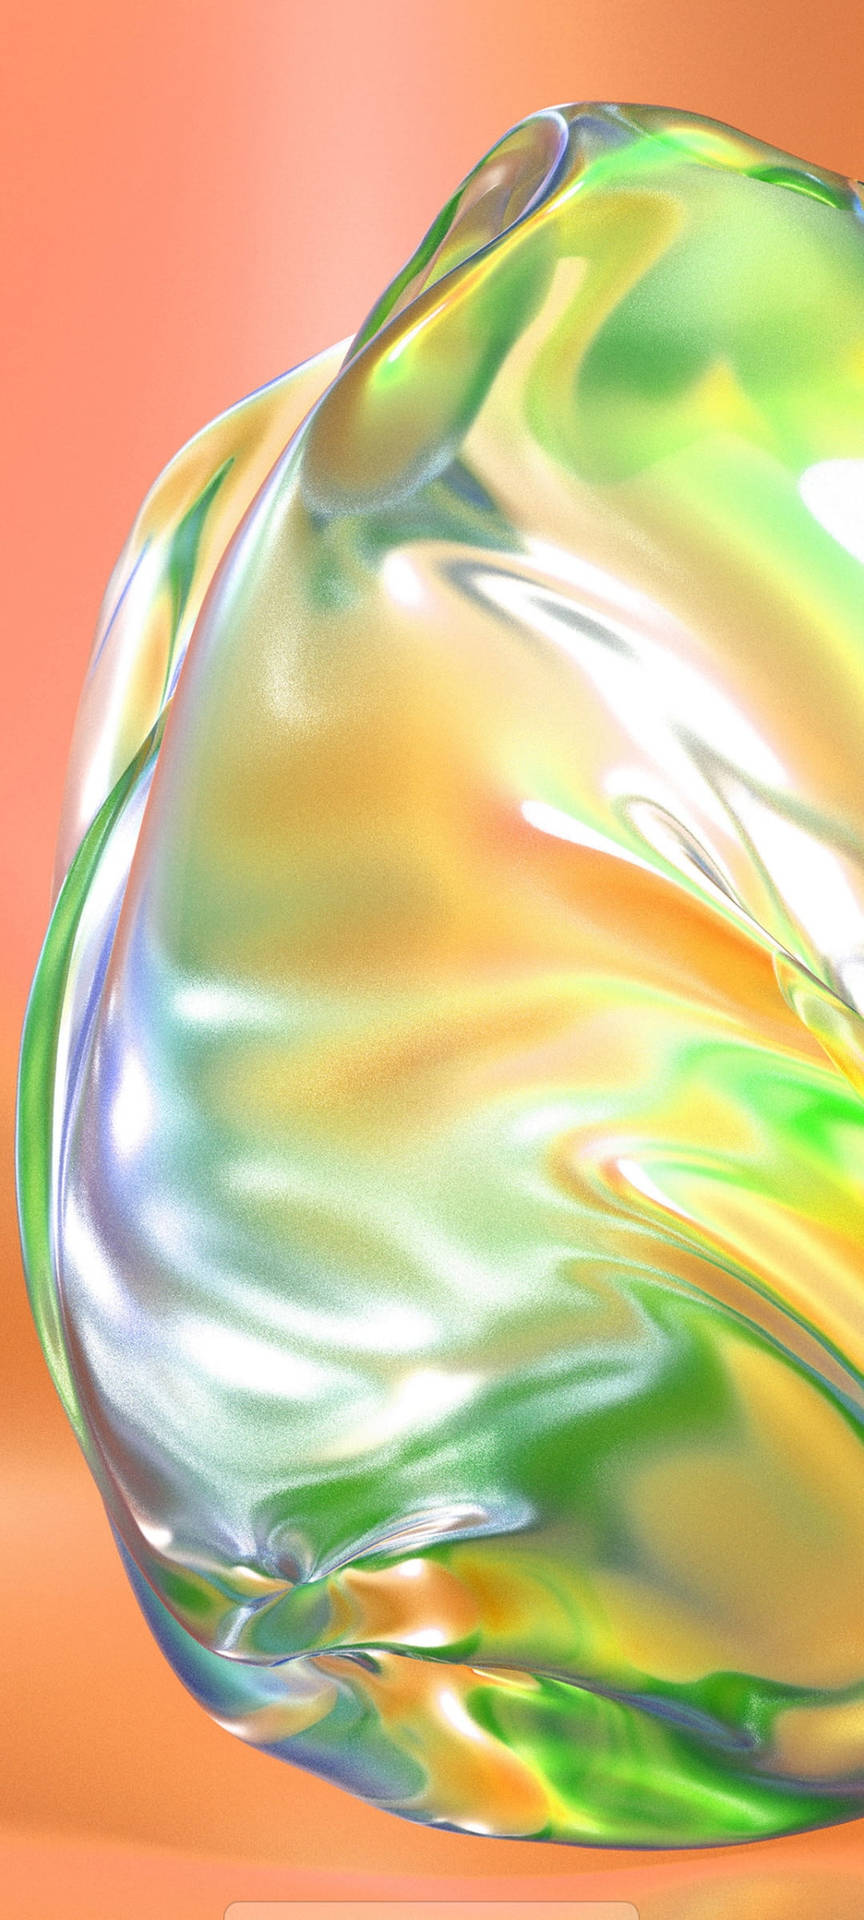 Samsung A51 Water Bubble Close-up Wallpaper